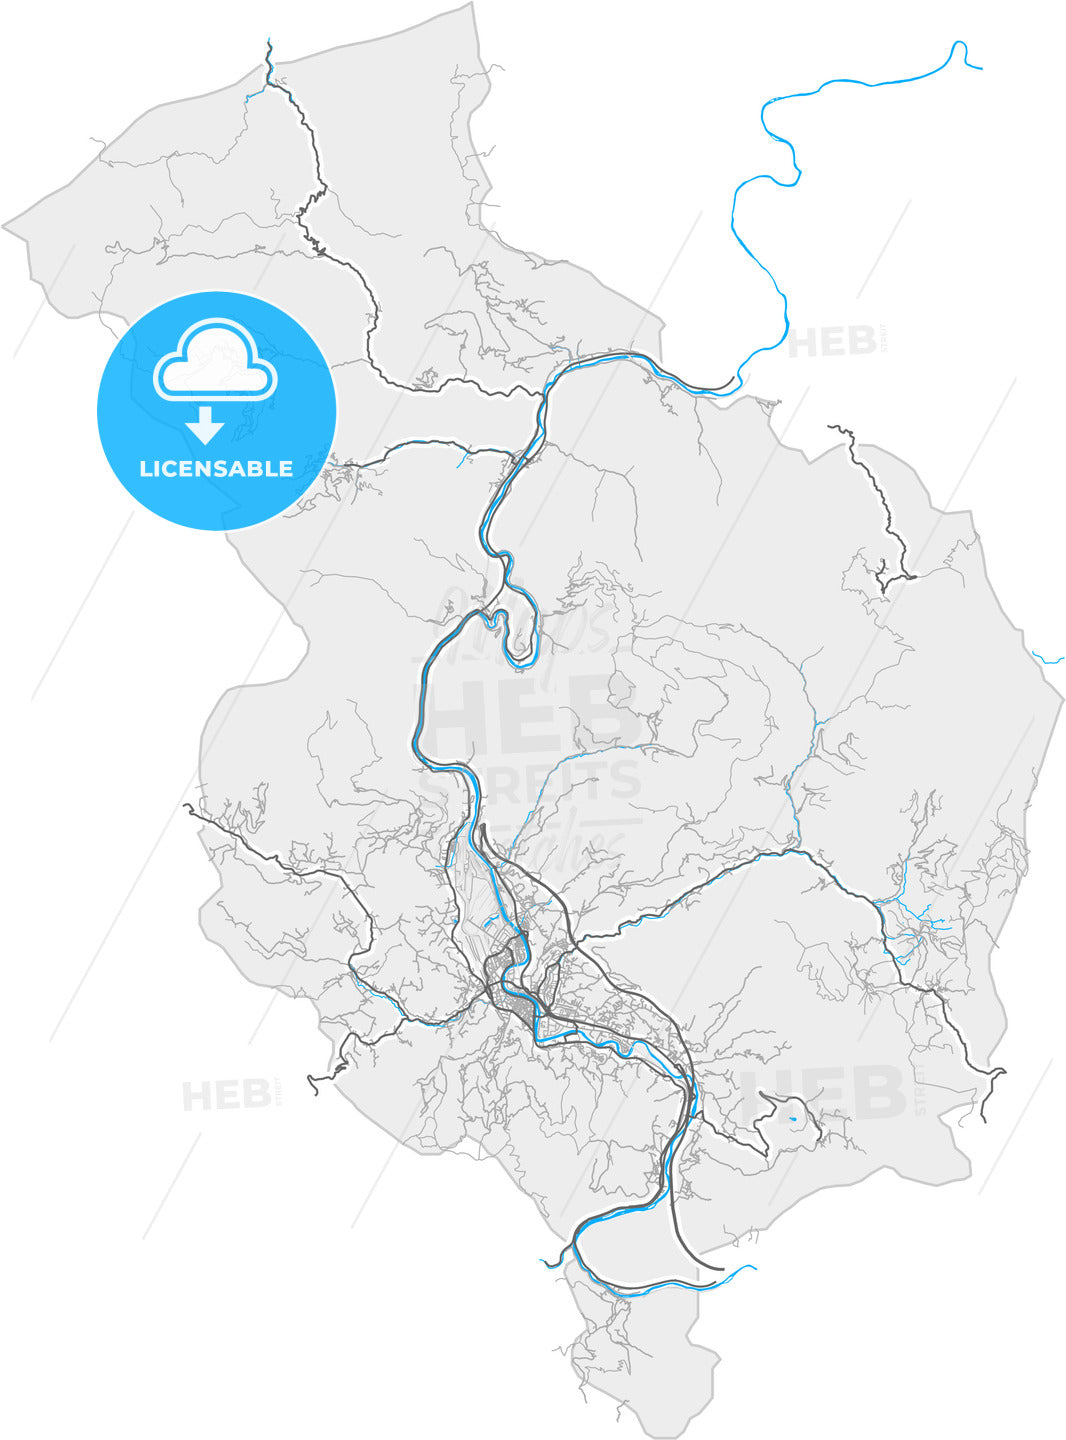 Zenica, Zenica-Doboj Canton, Bosnia and Herzegovina, high quality vector map